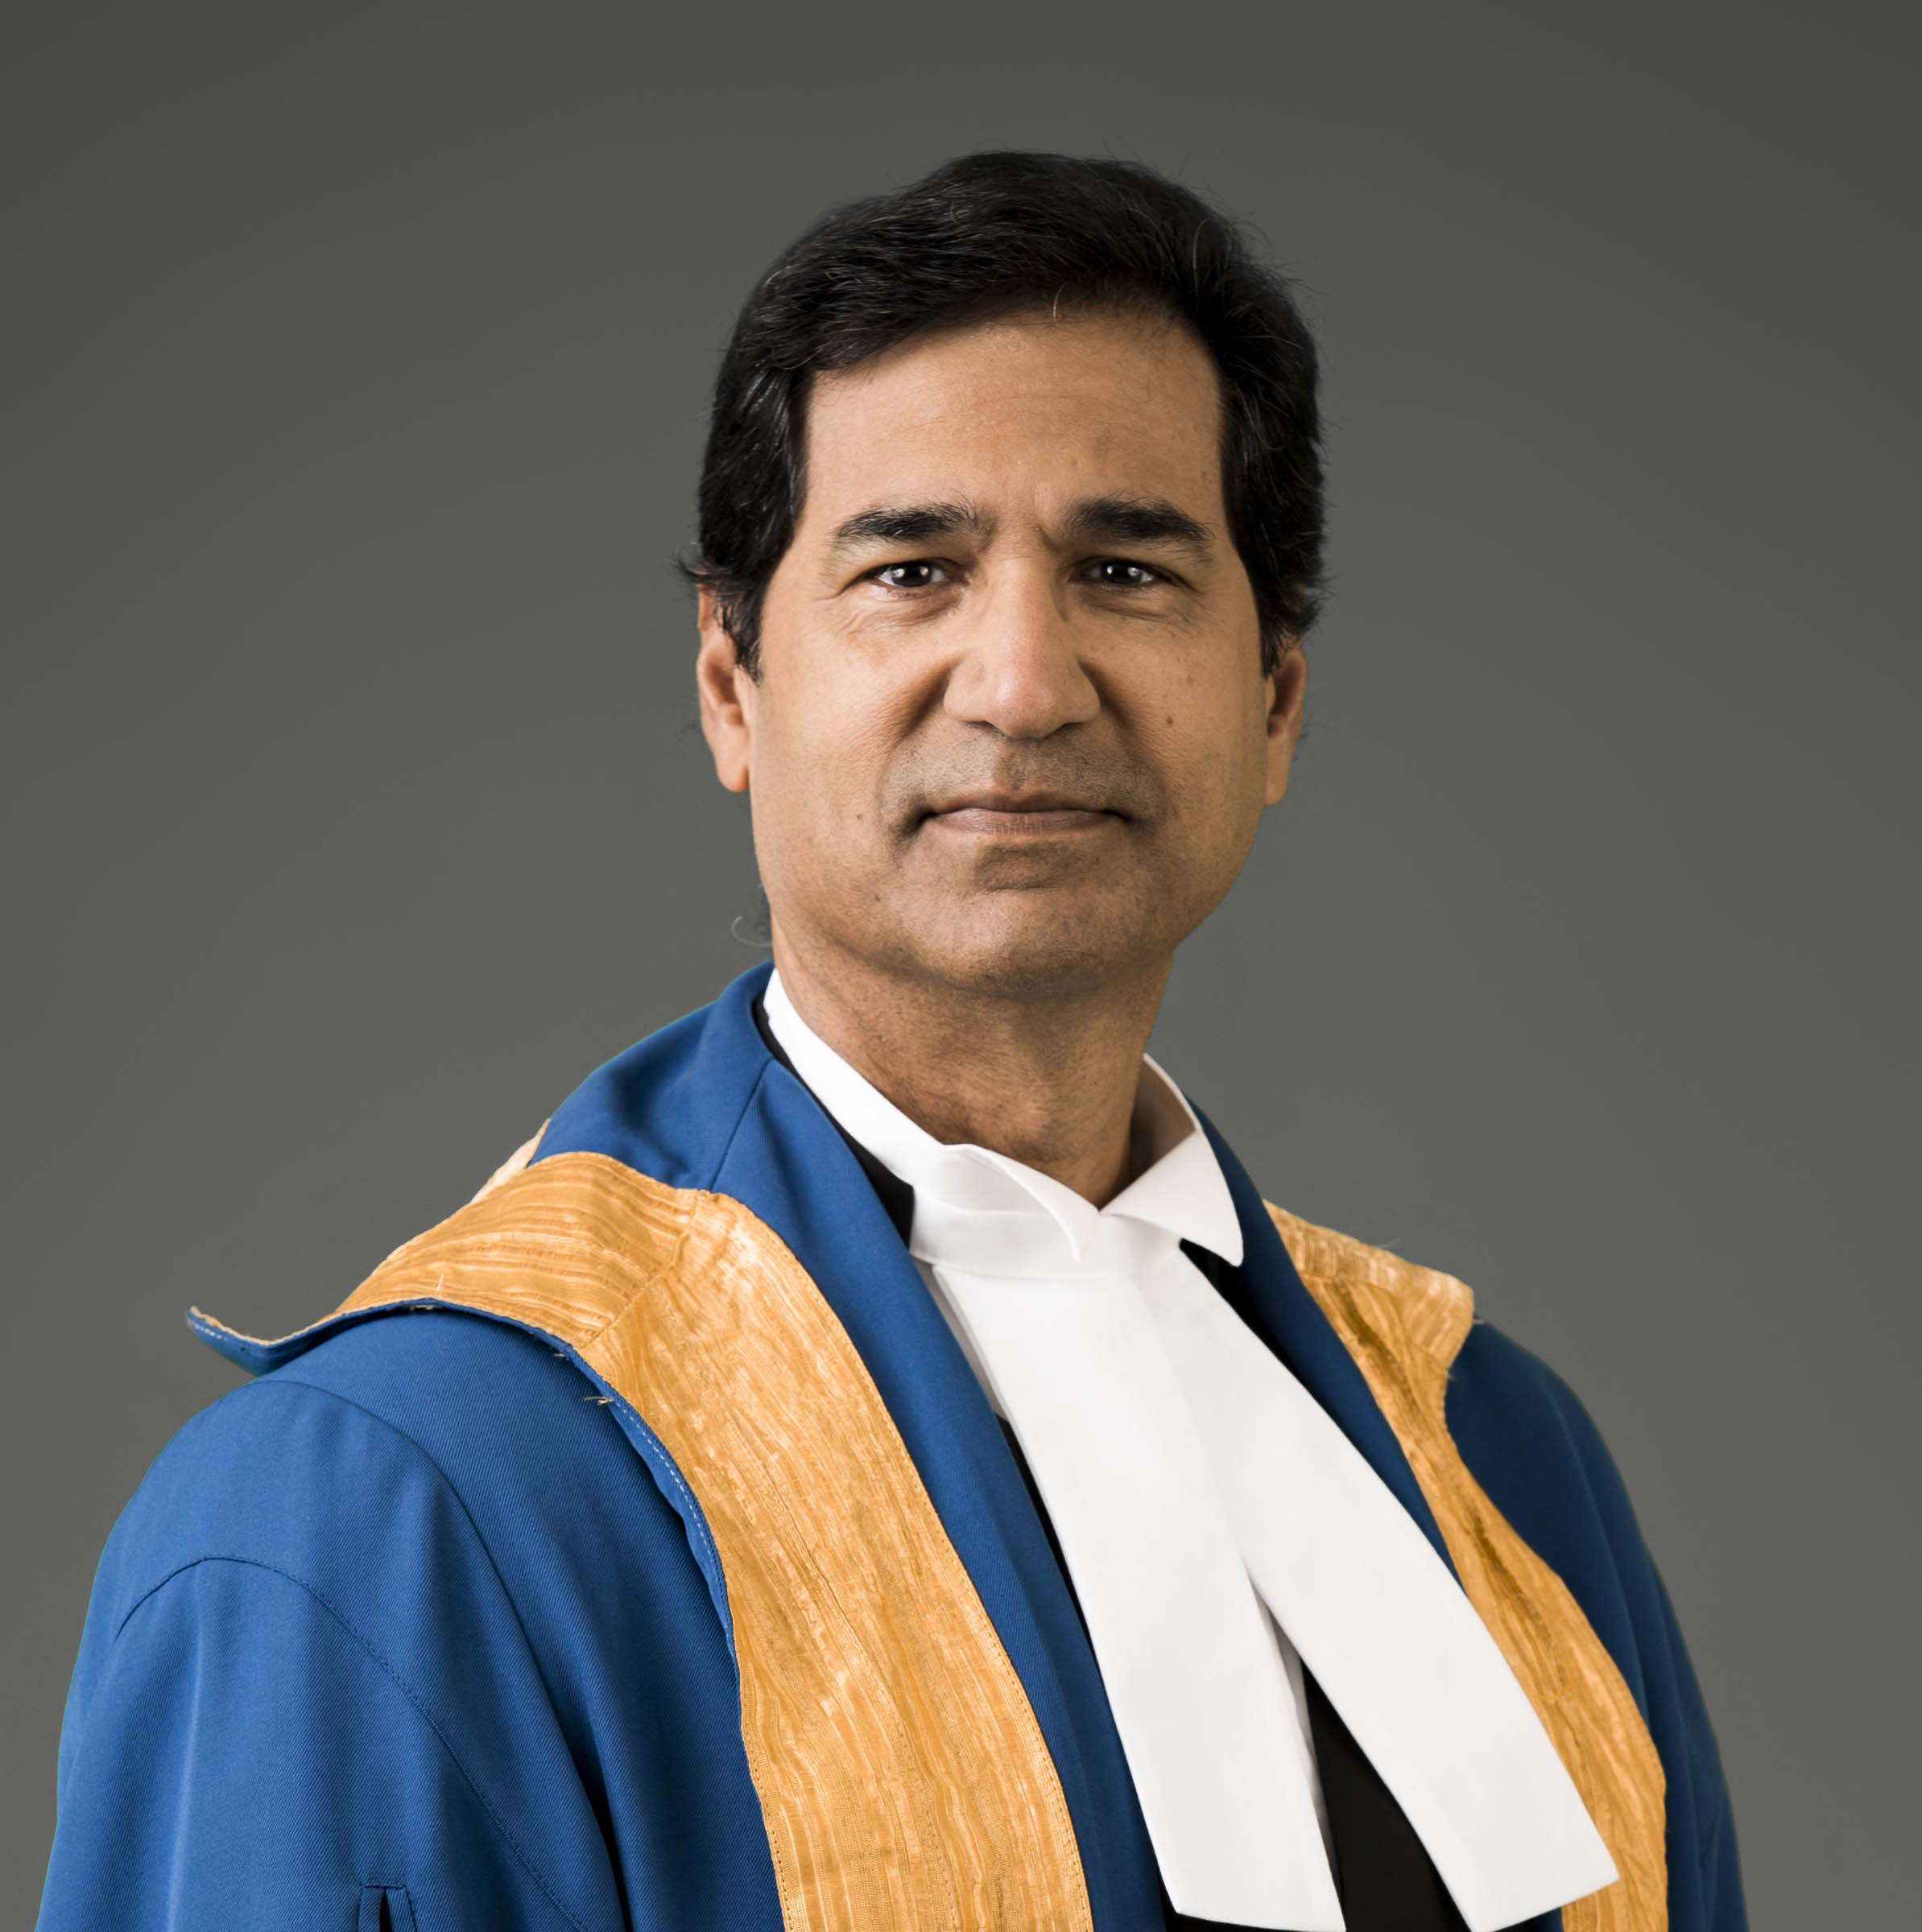 The Honourable Mr. Justice Peter Jamadar